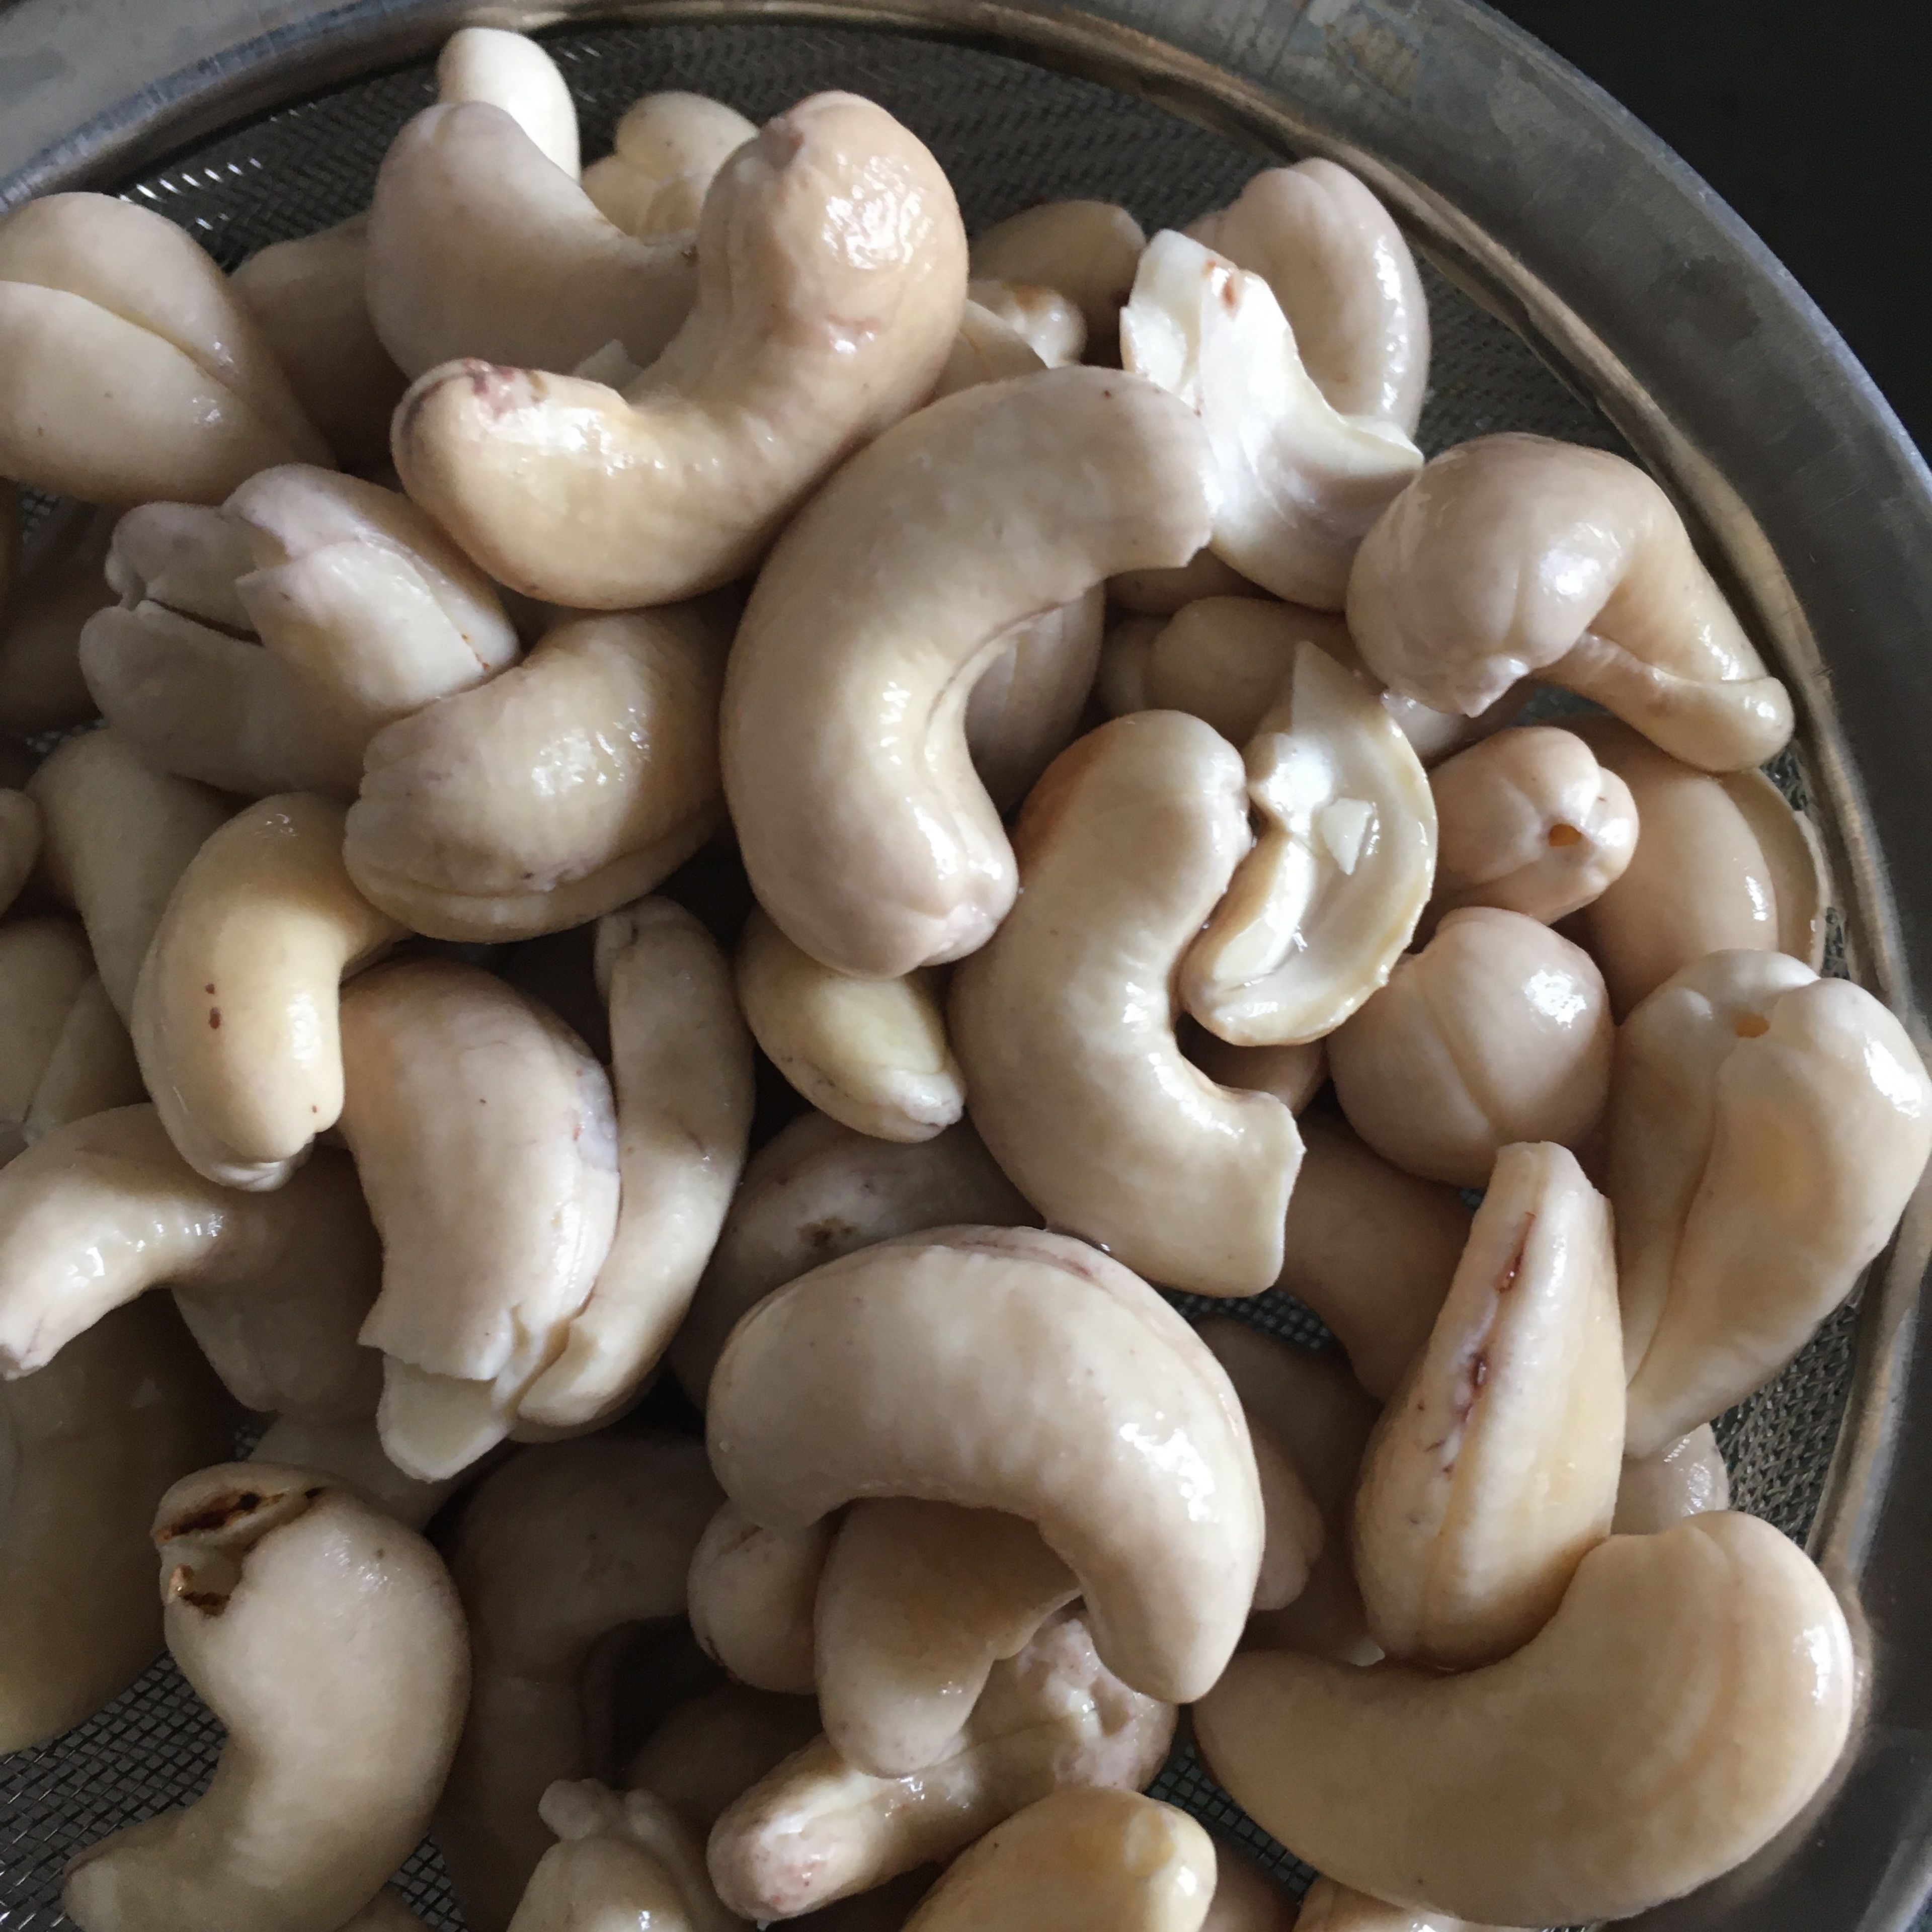 Soak cashews for 3 hours